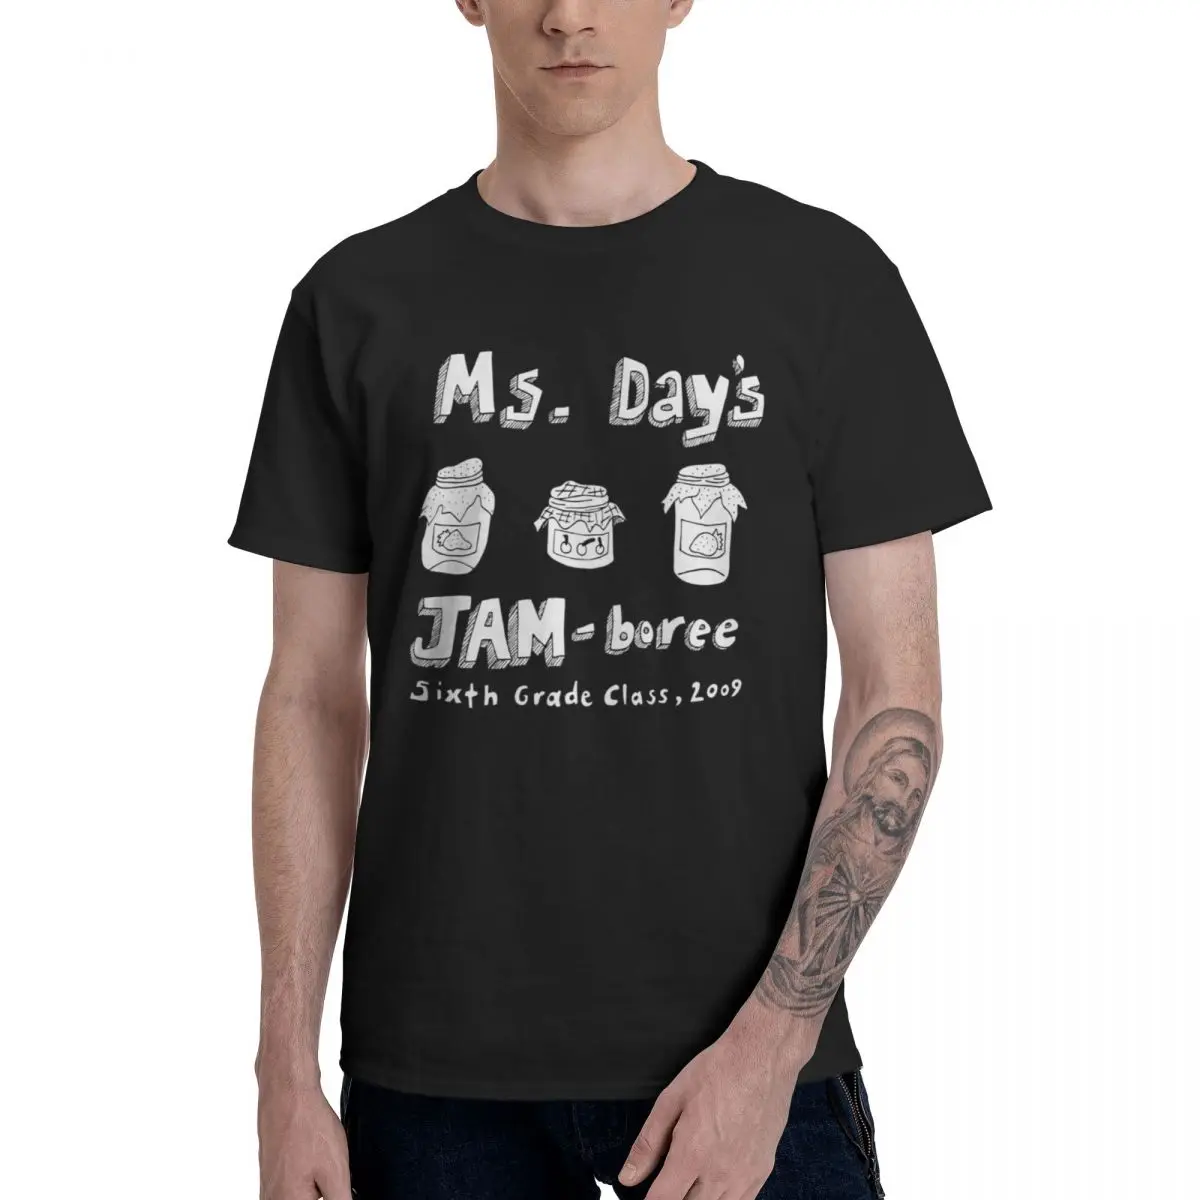 

Ms. Day's Jam-boree 2009 - New Girl T-Shirts Pure Cotton Crewneck Men's T-Shirt Short Long Sleeve Plus Size Unisex Tees Tops